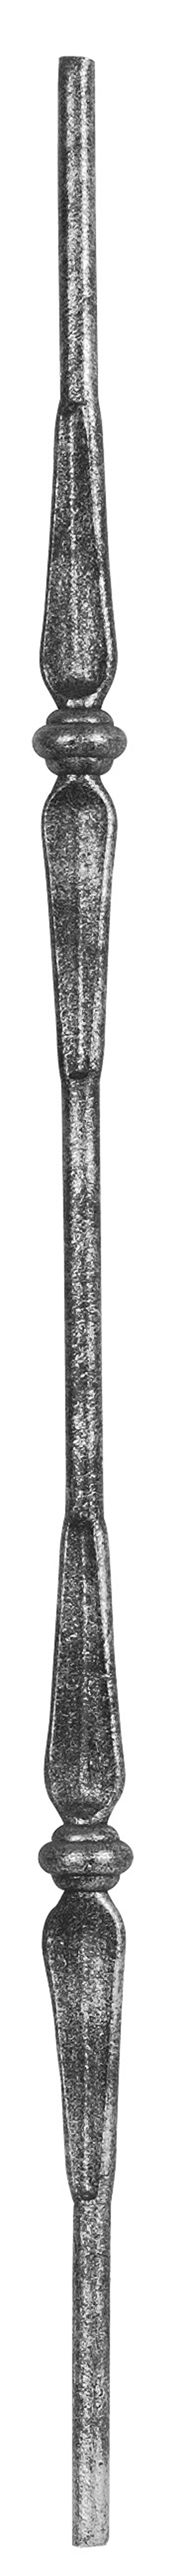 Zierstab | Länge: 900 mm | Material: Ø14 mm glatt | Stahl S235JR, roh